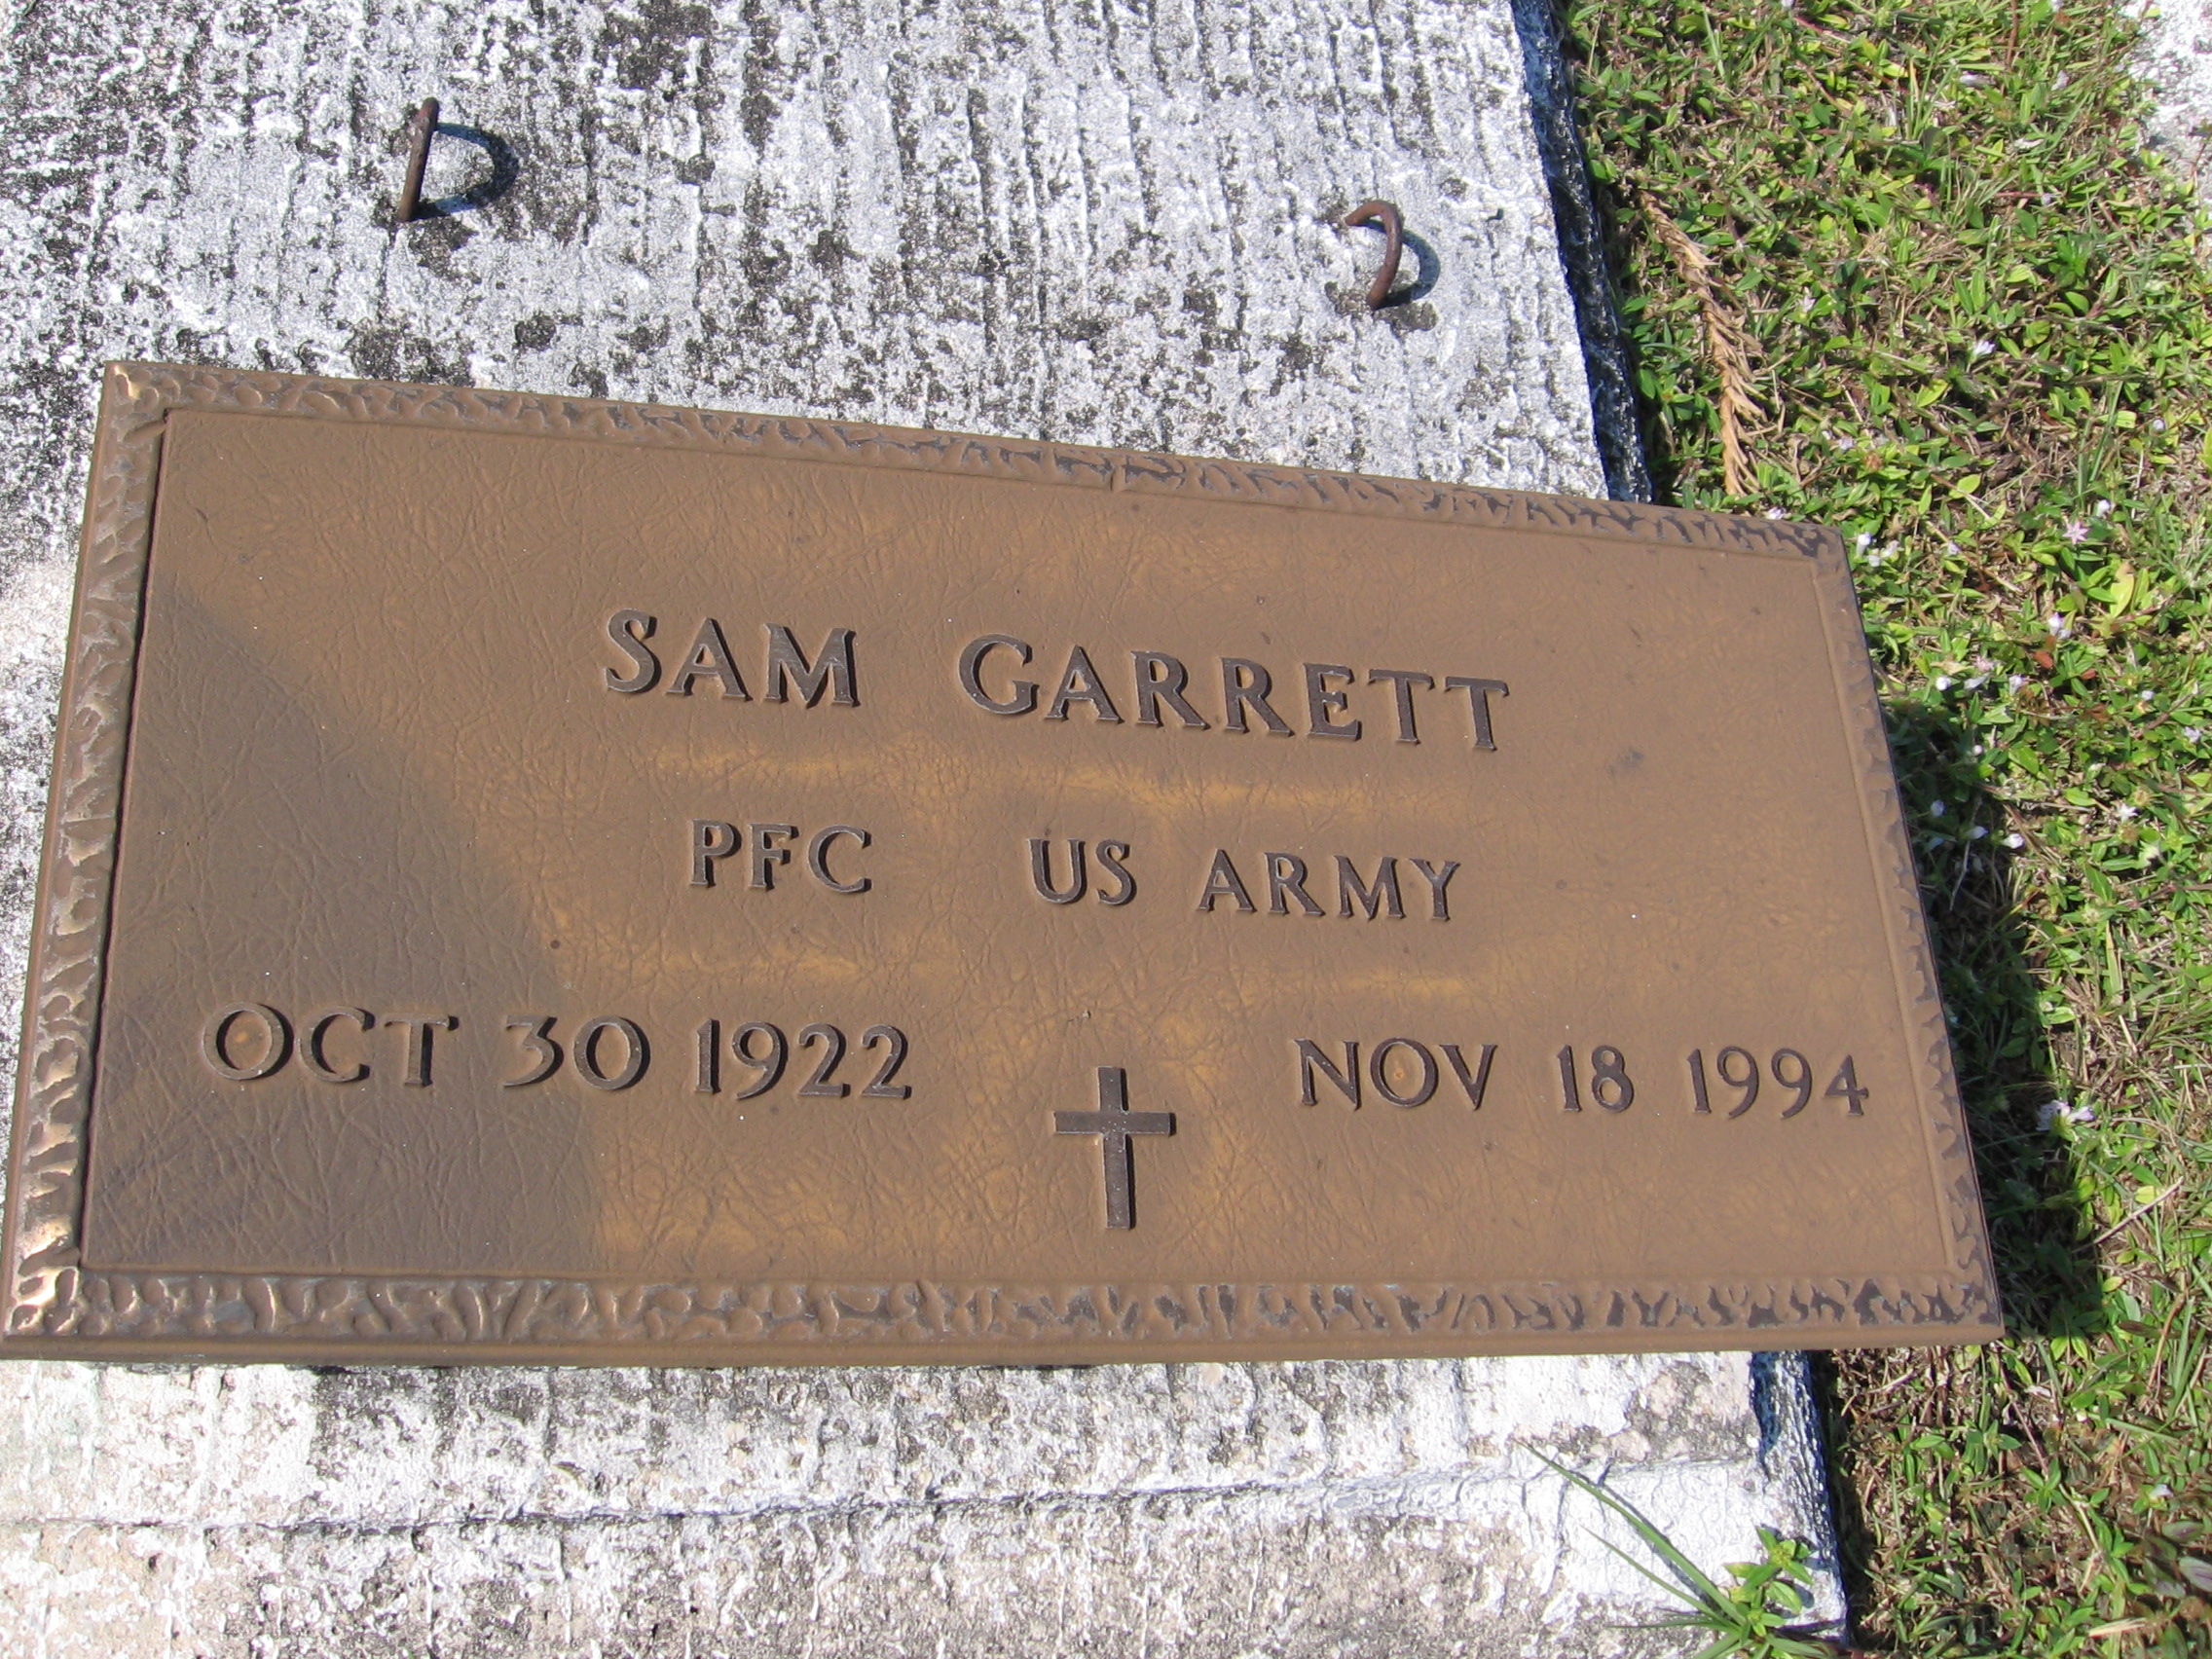 PFC Sam Garrett